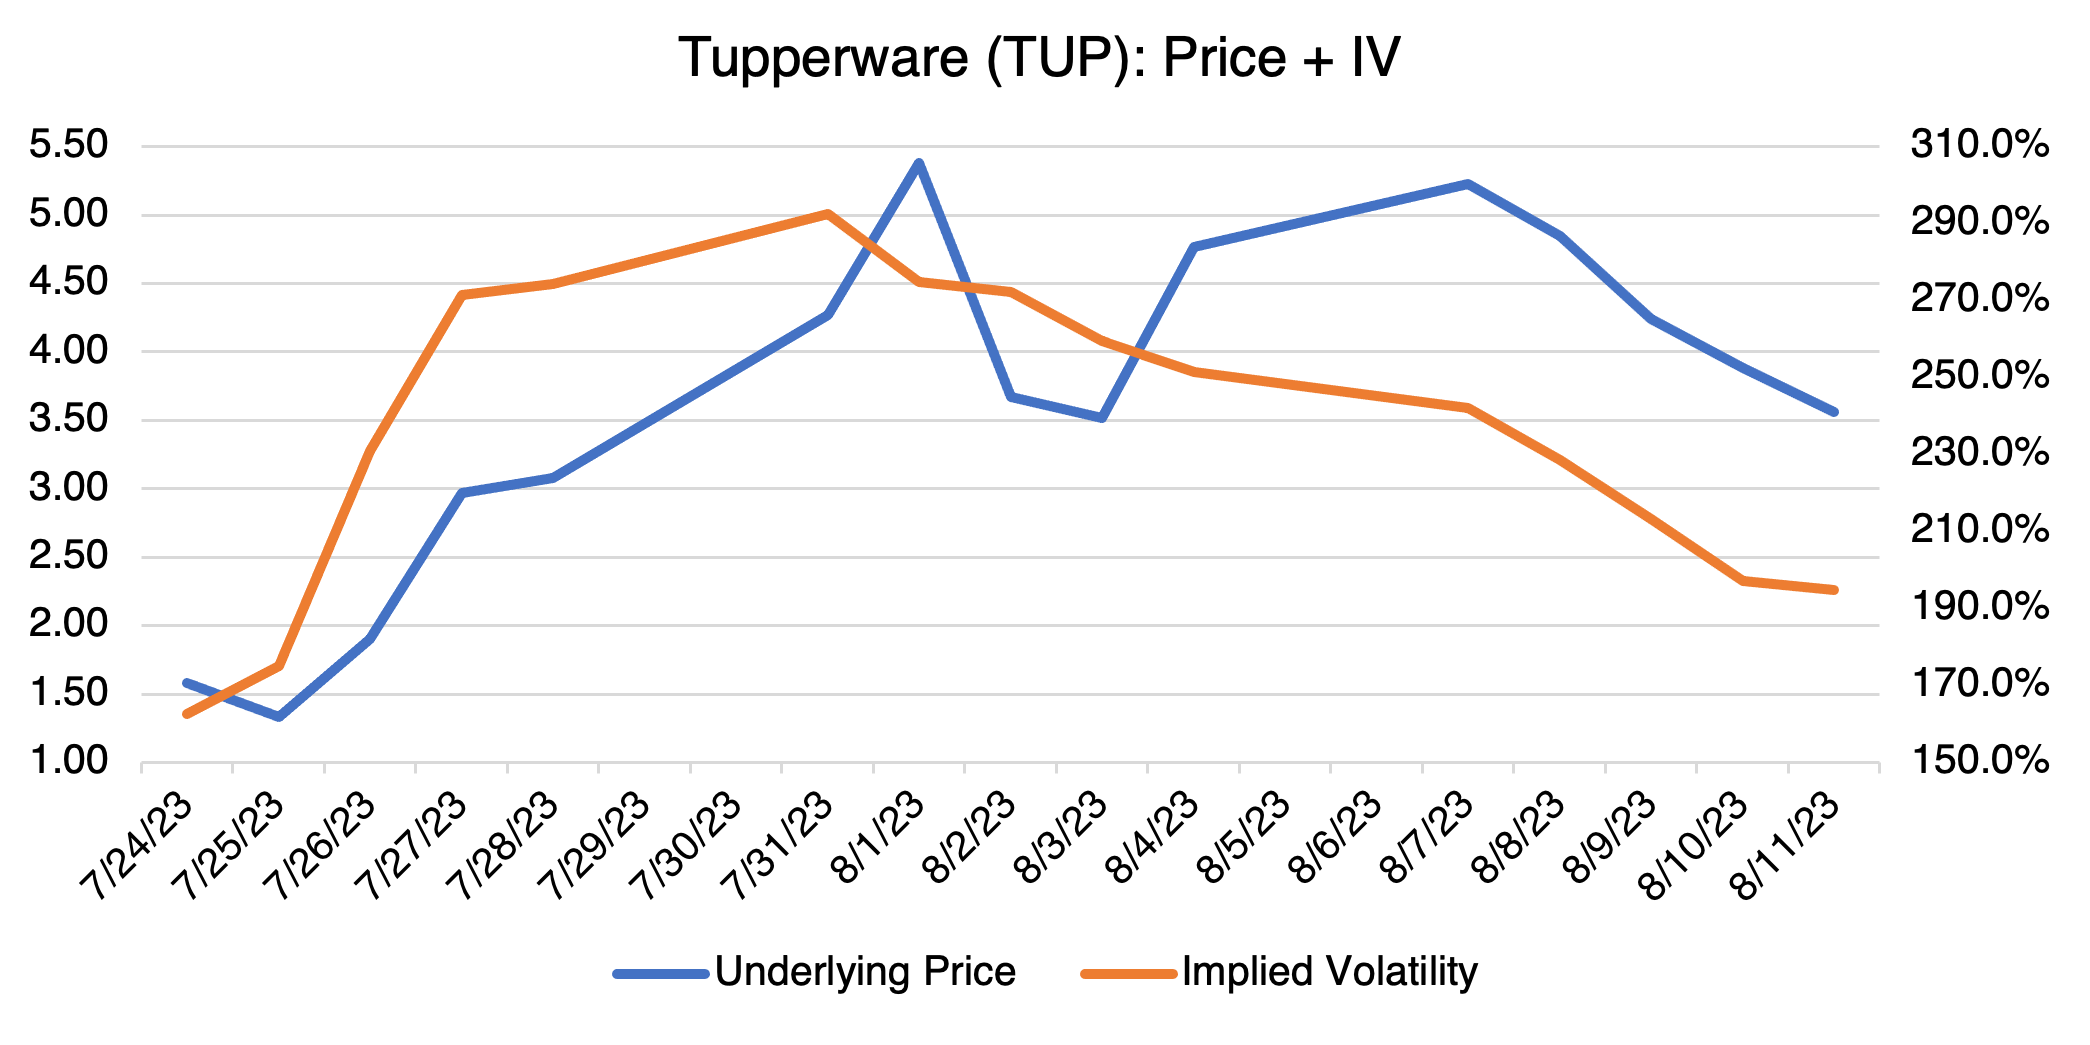 Tupperware (TUP): Price + IV